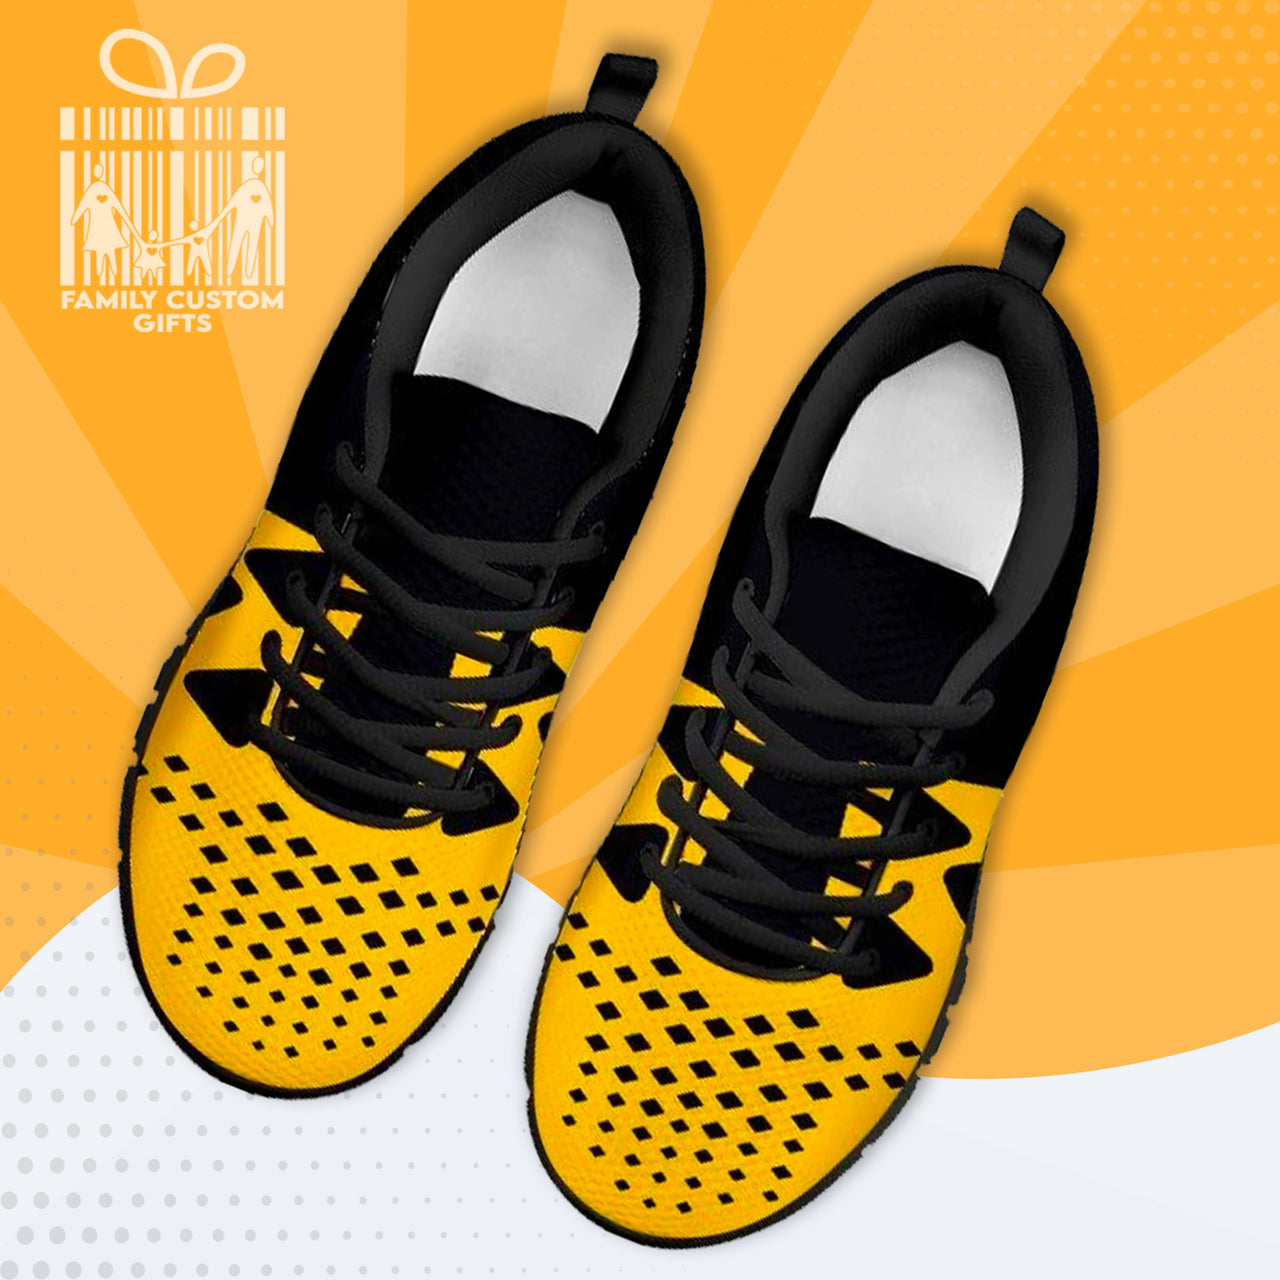 Iowa Custom Shoes for Men Women 3D Print Fashion Sneaker Gifts for Her Him